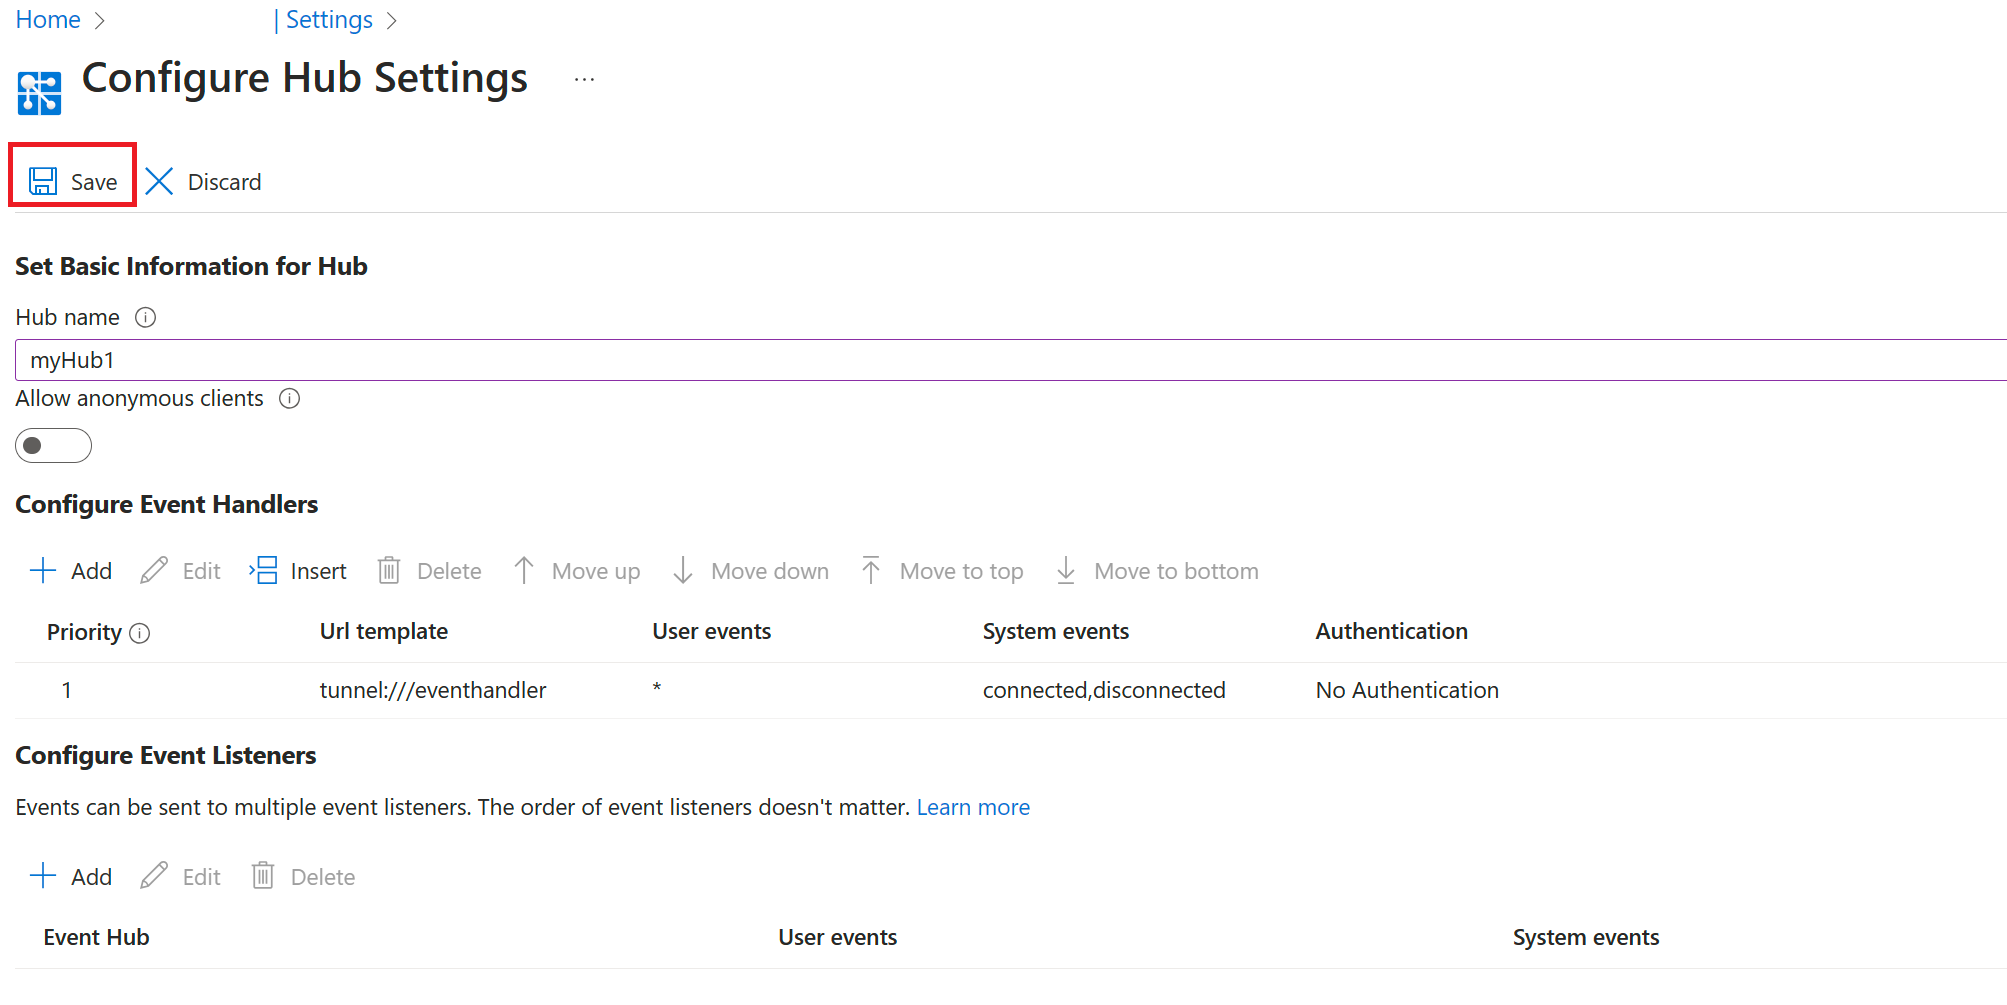 Screenshot of Azure Web PubSub Configure Event Handler - save.